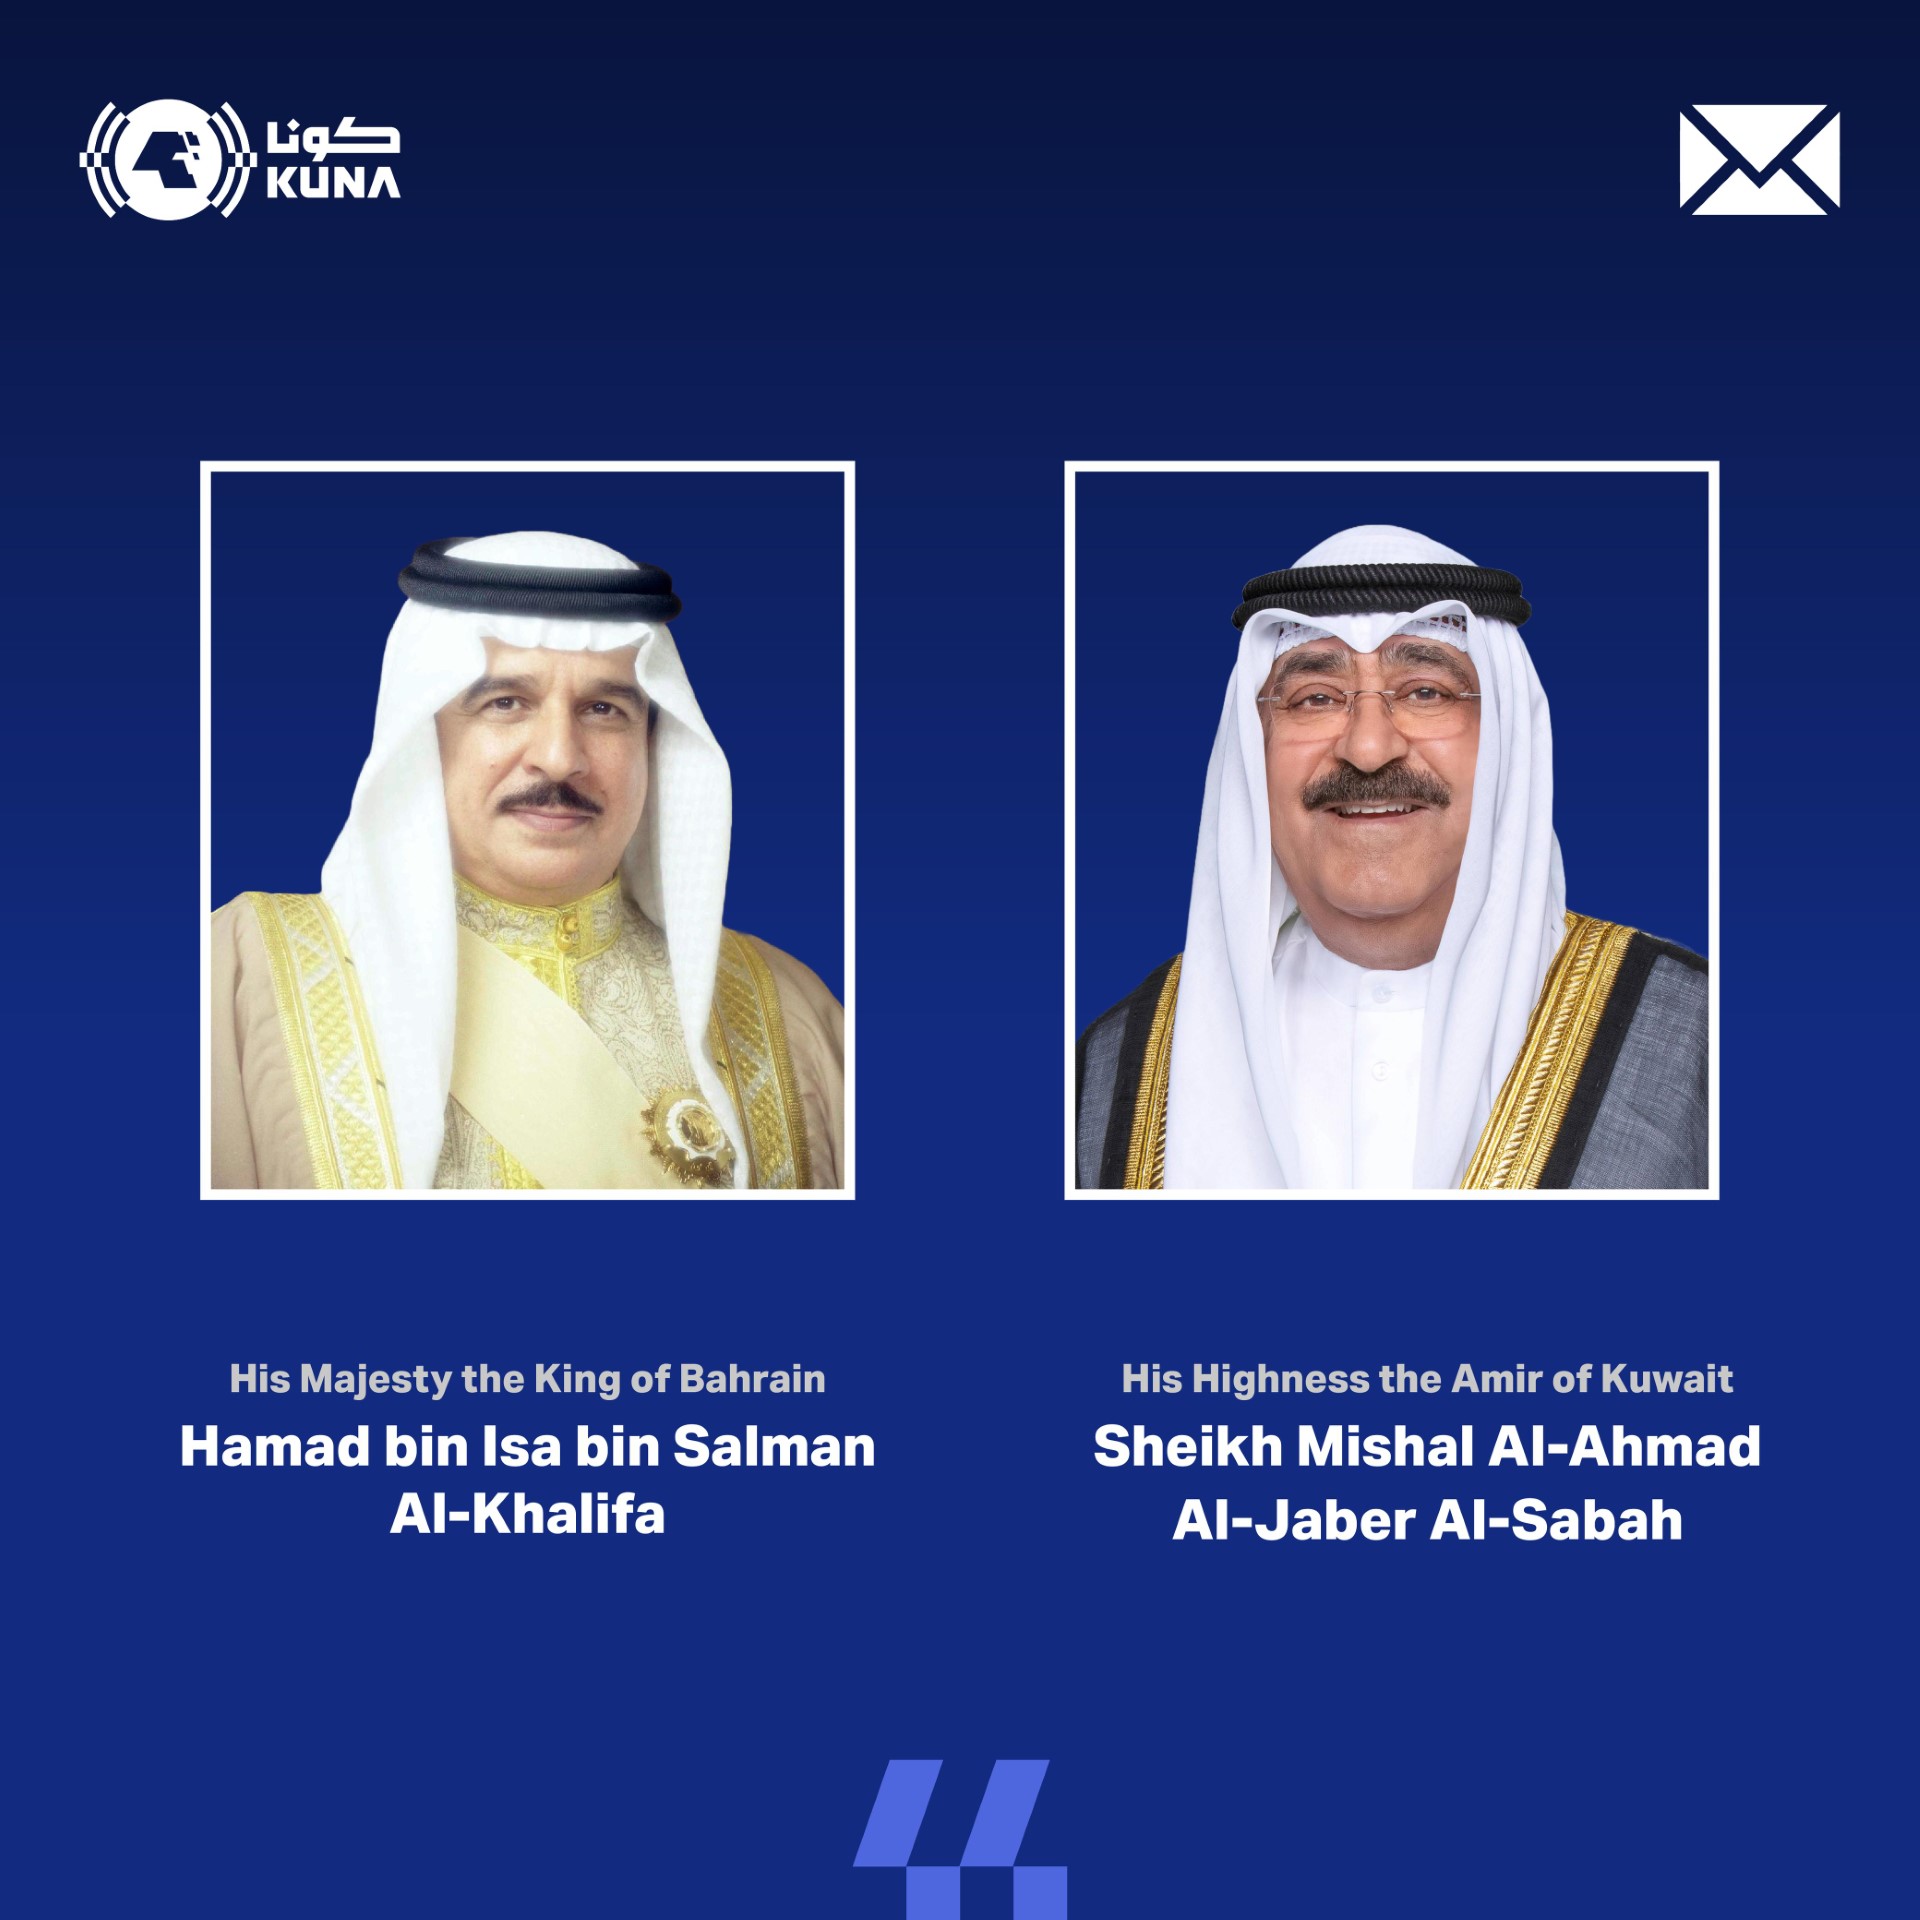 Kuwait Amir receives call from Bahrain King congratulating him on Ramadan                                                                                                                                                                                 